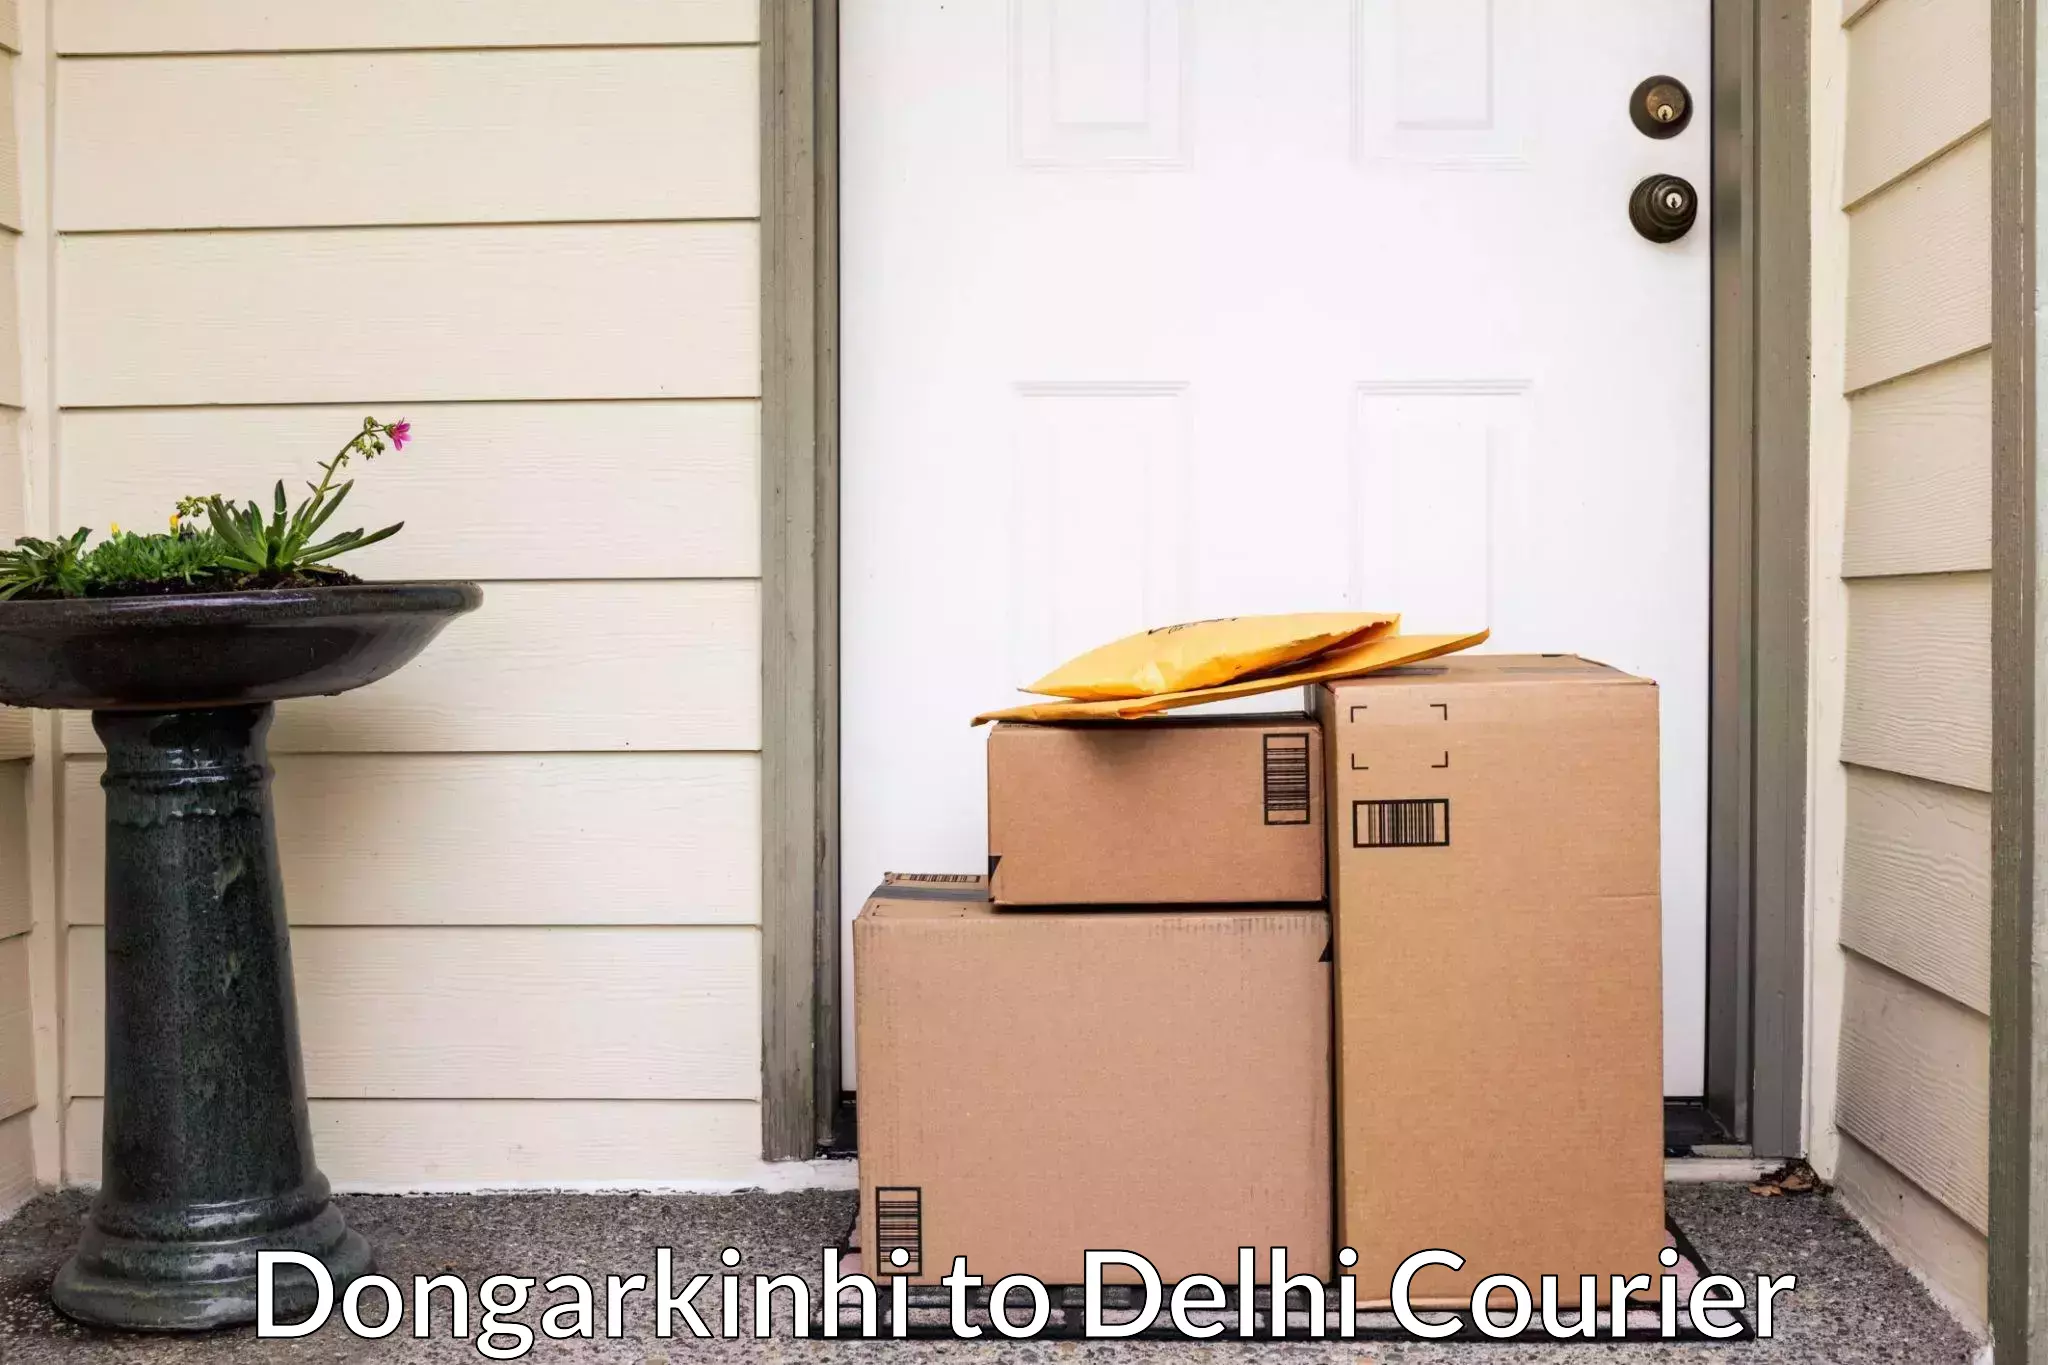 Home shifting experts Dongarkinhi to Delhi